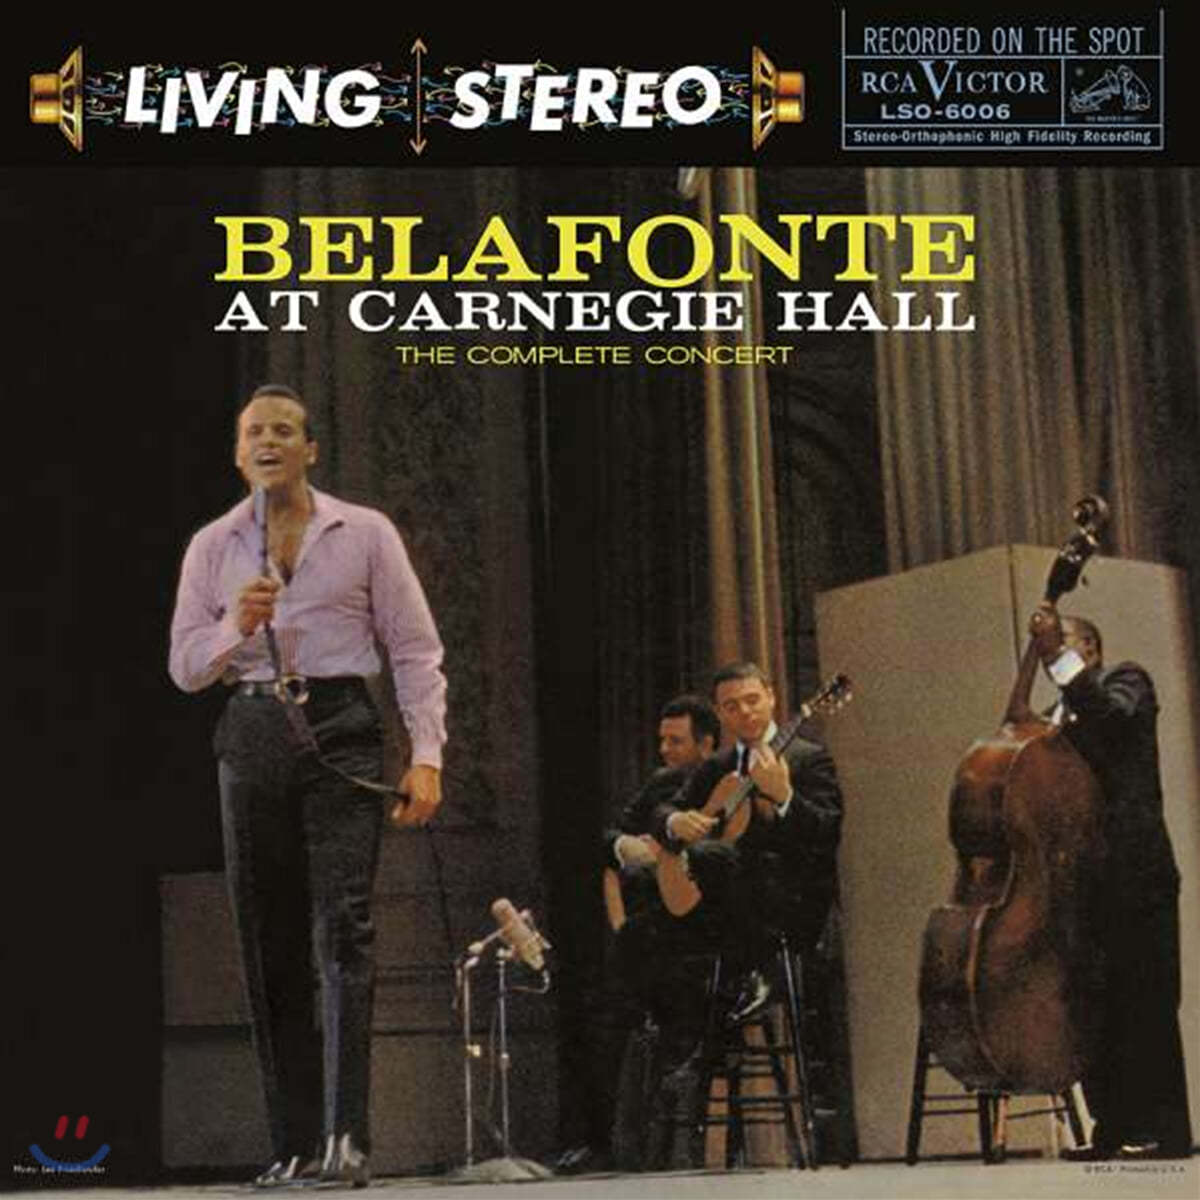 Harry Belafonte - At Carnegie Hall 해리 벨라폰테 1959년 카네기홀 실황 [5LP]